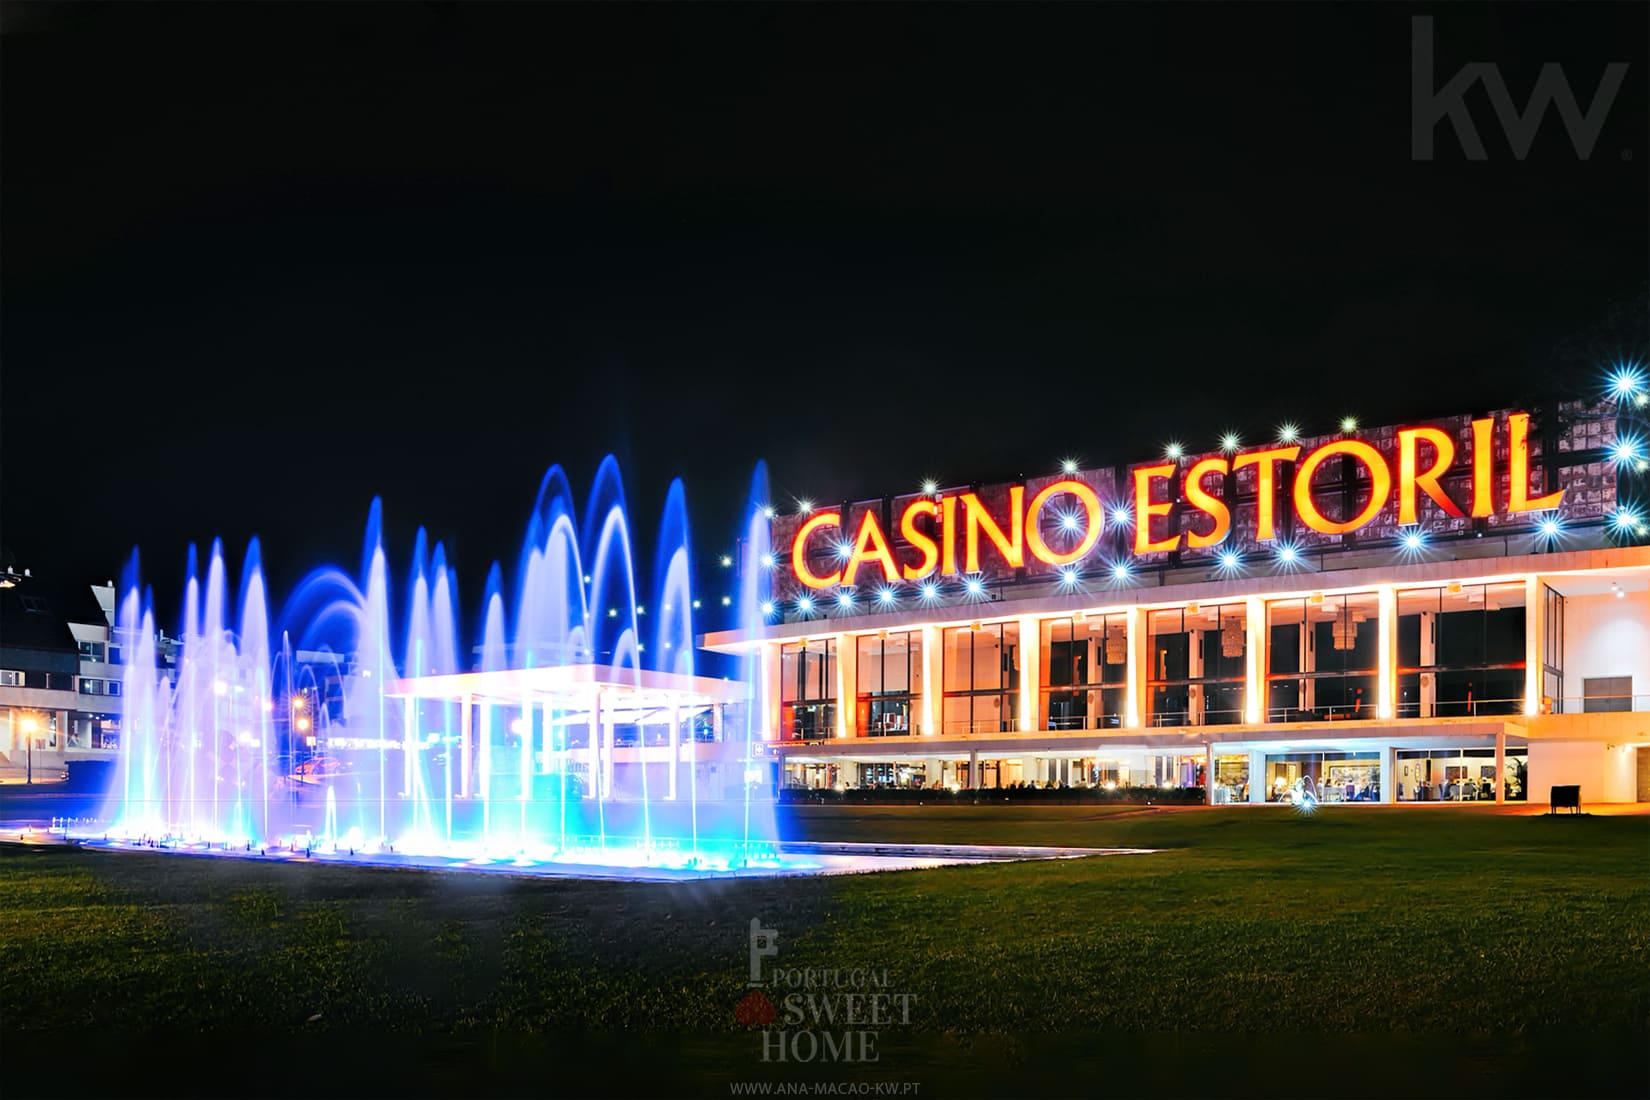 View of Casino Estoril, located nearby